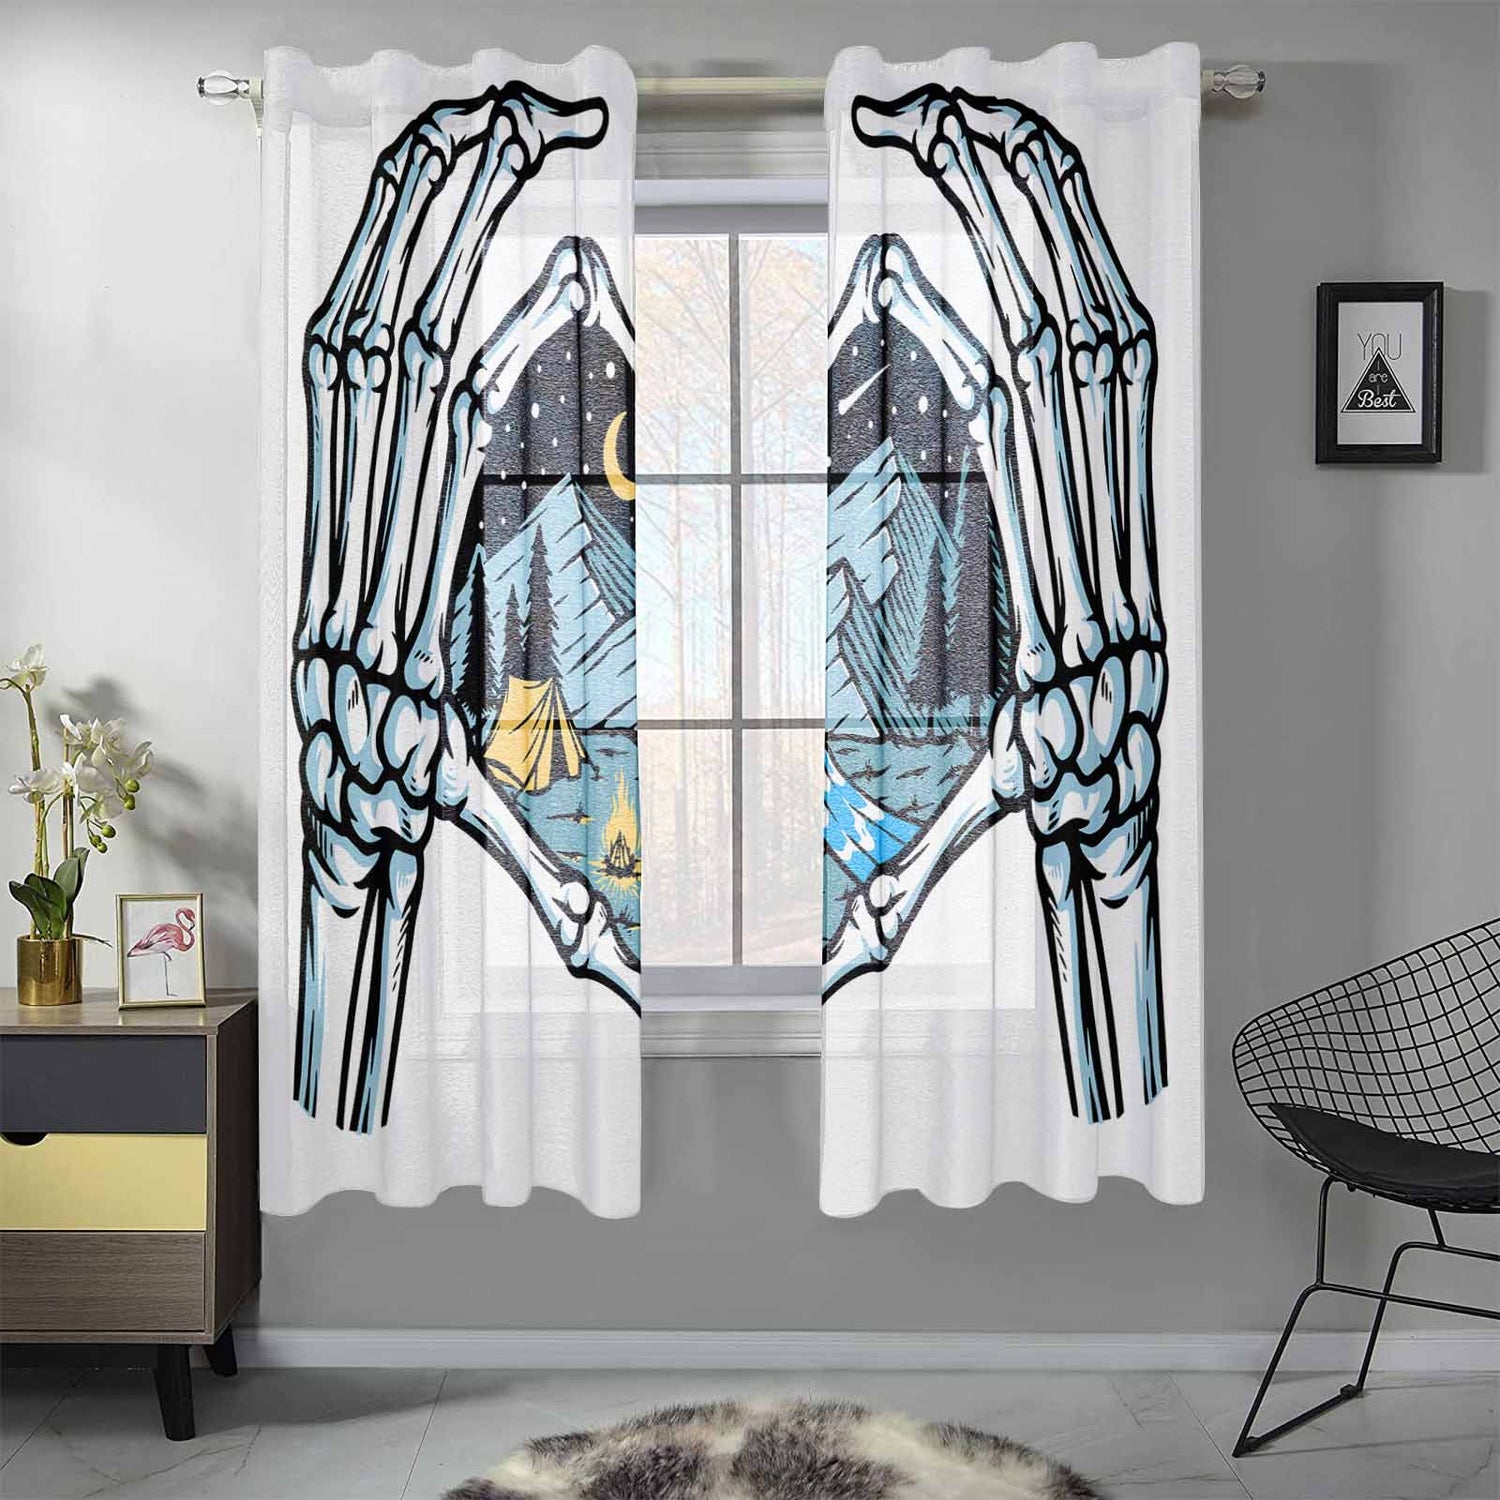 Kate McEnroe New York Sheer 2 - Panel Window Curtains In Skeleton Loves MountainsWindow CurtainsDG1170265DXH7856D